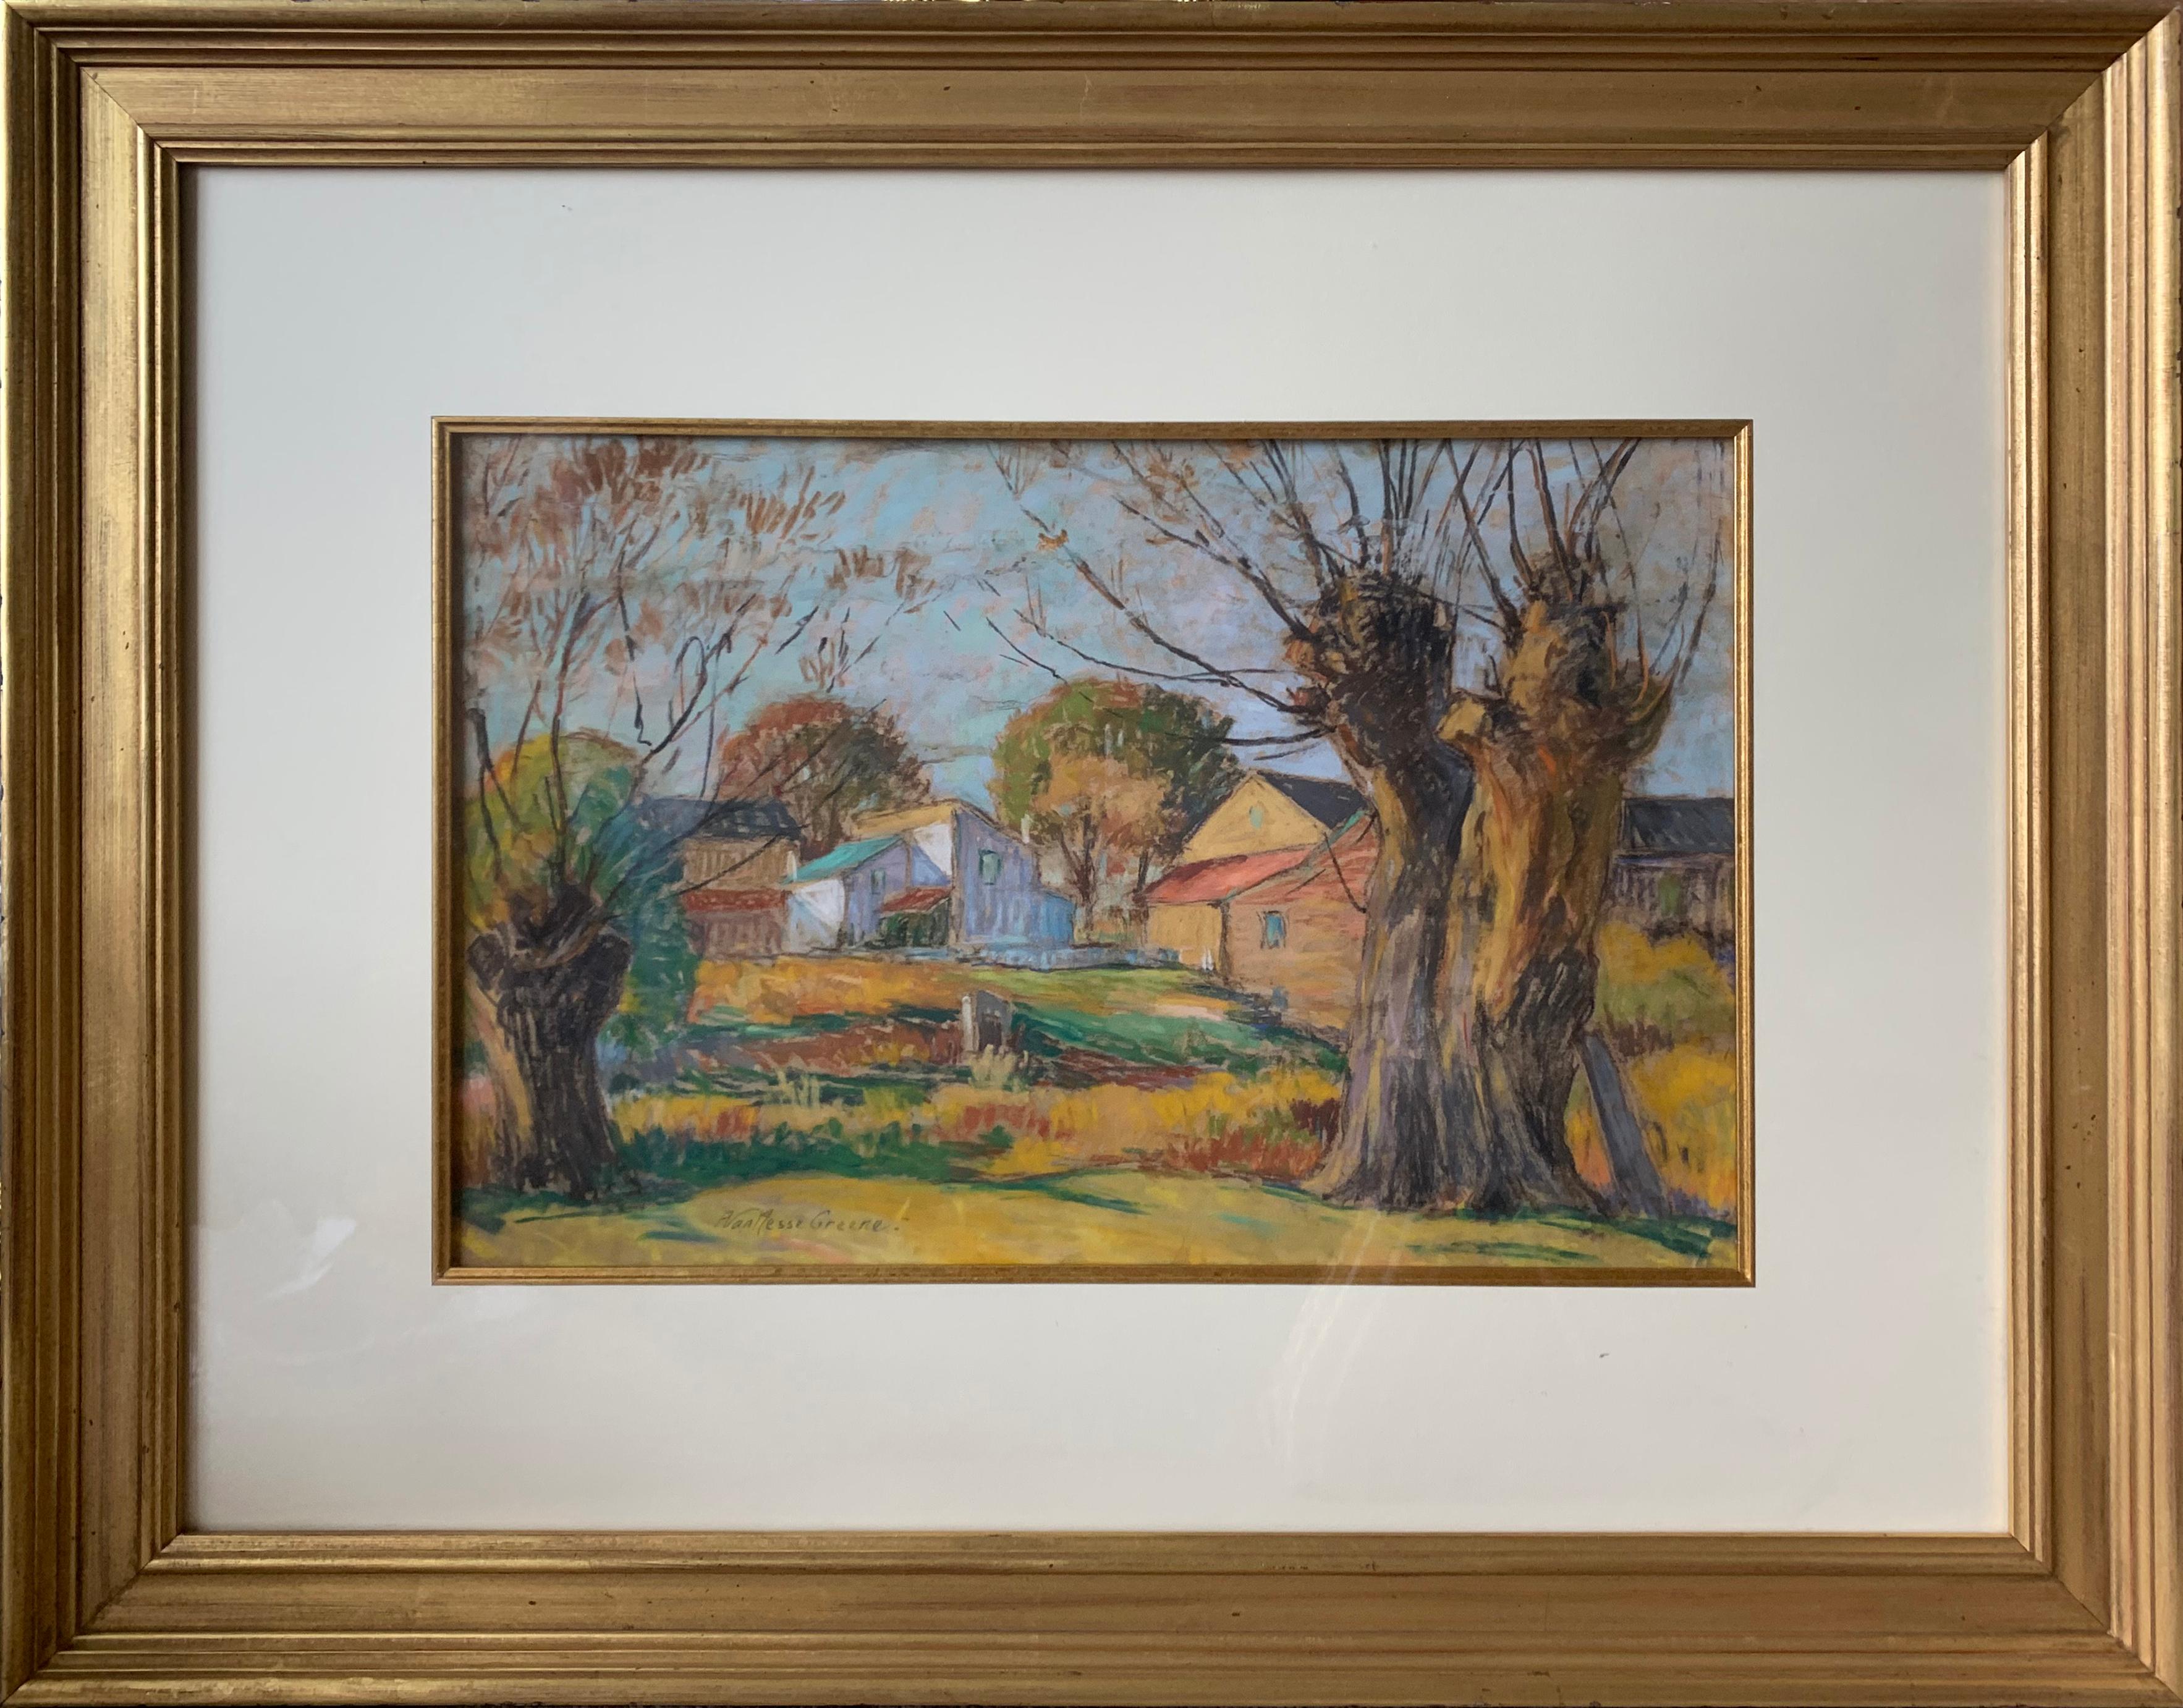 The Golden Hour, American Impressionist Landscape, Pastel on Paper, Framed - Painting by Albert Van Nesse Greene